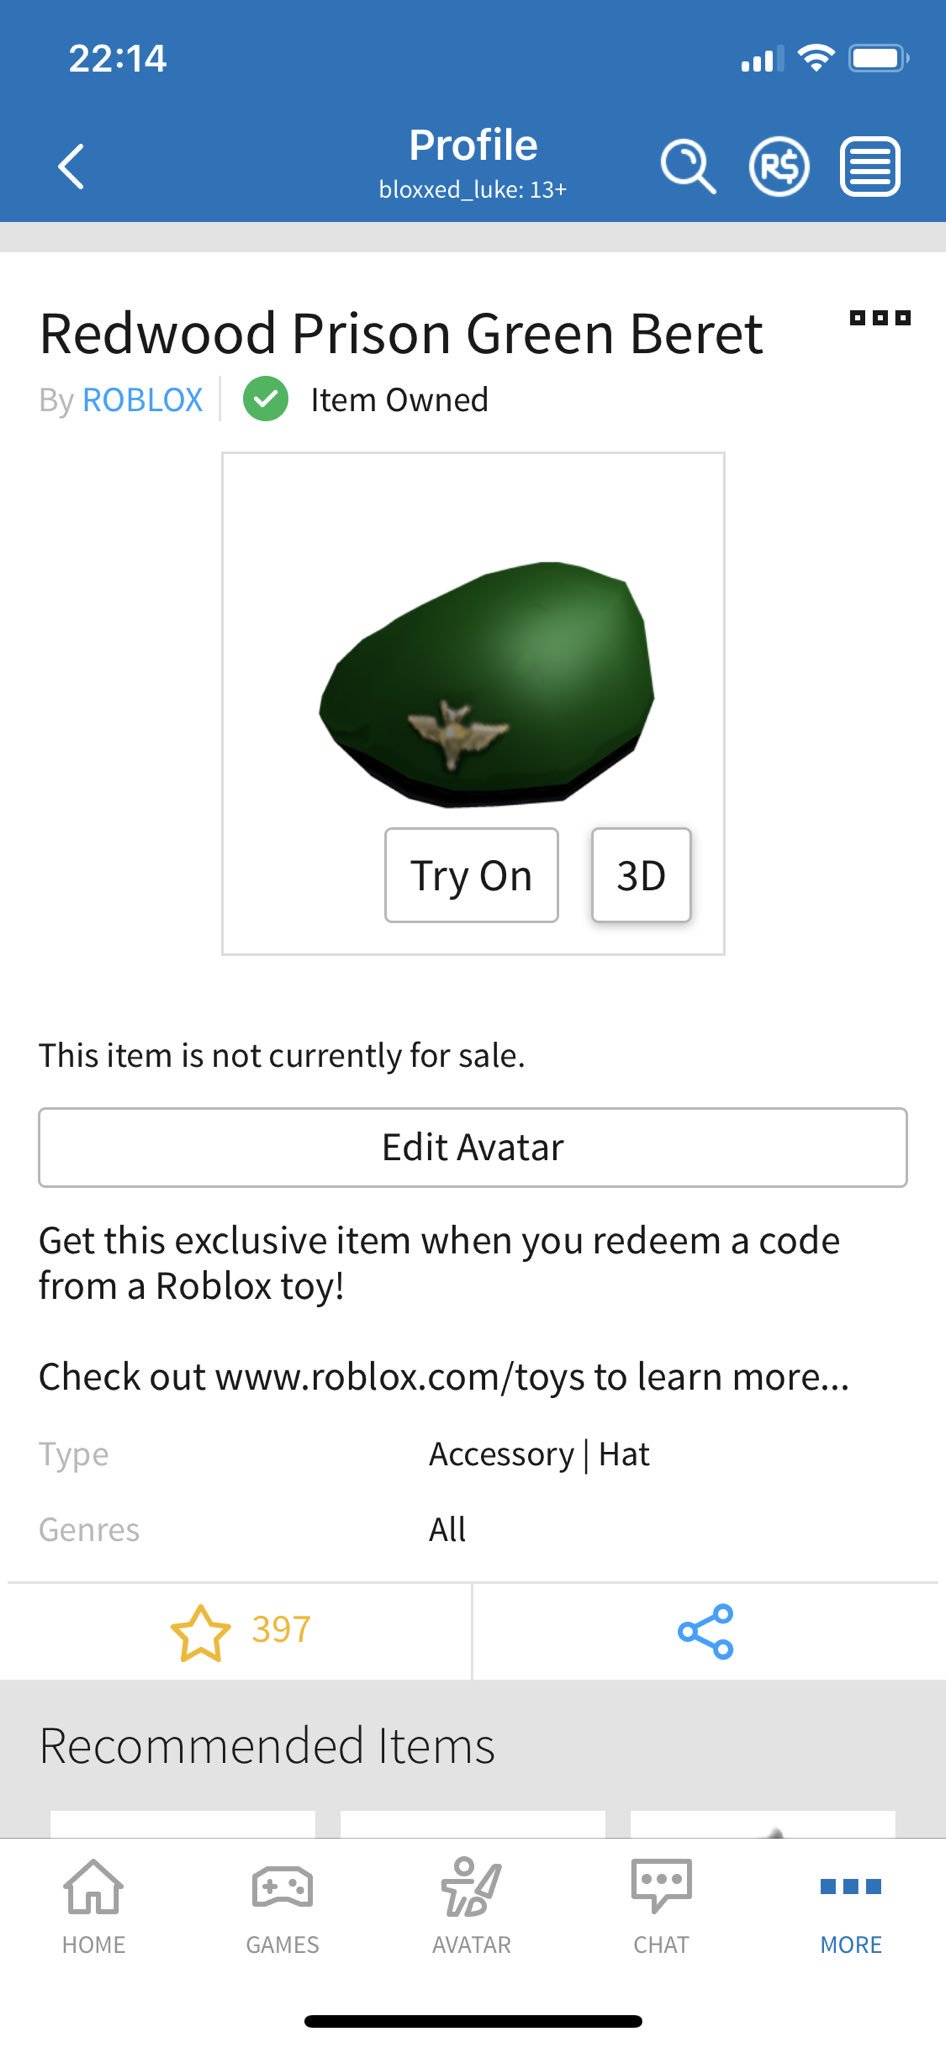 Jurrd on X: Free toy codes, quick! 👀😱 #Roblox  /  X